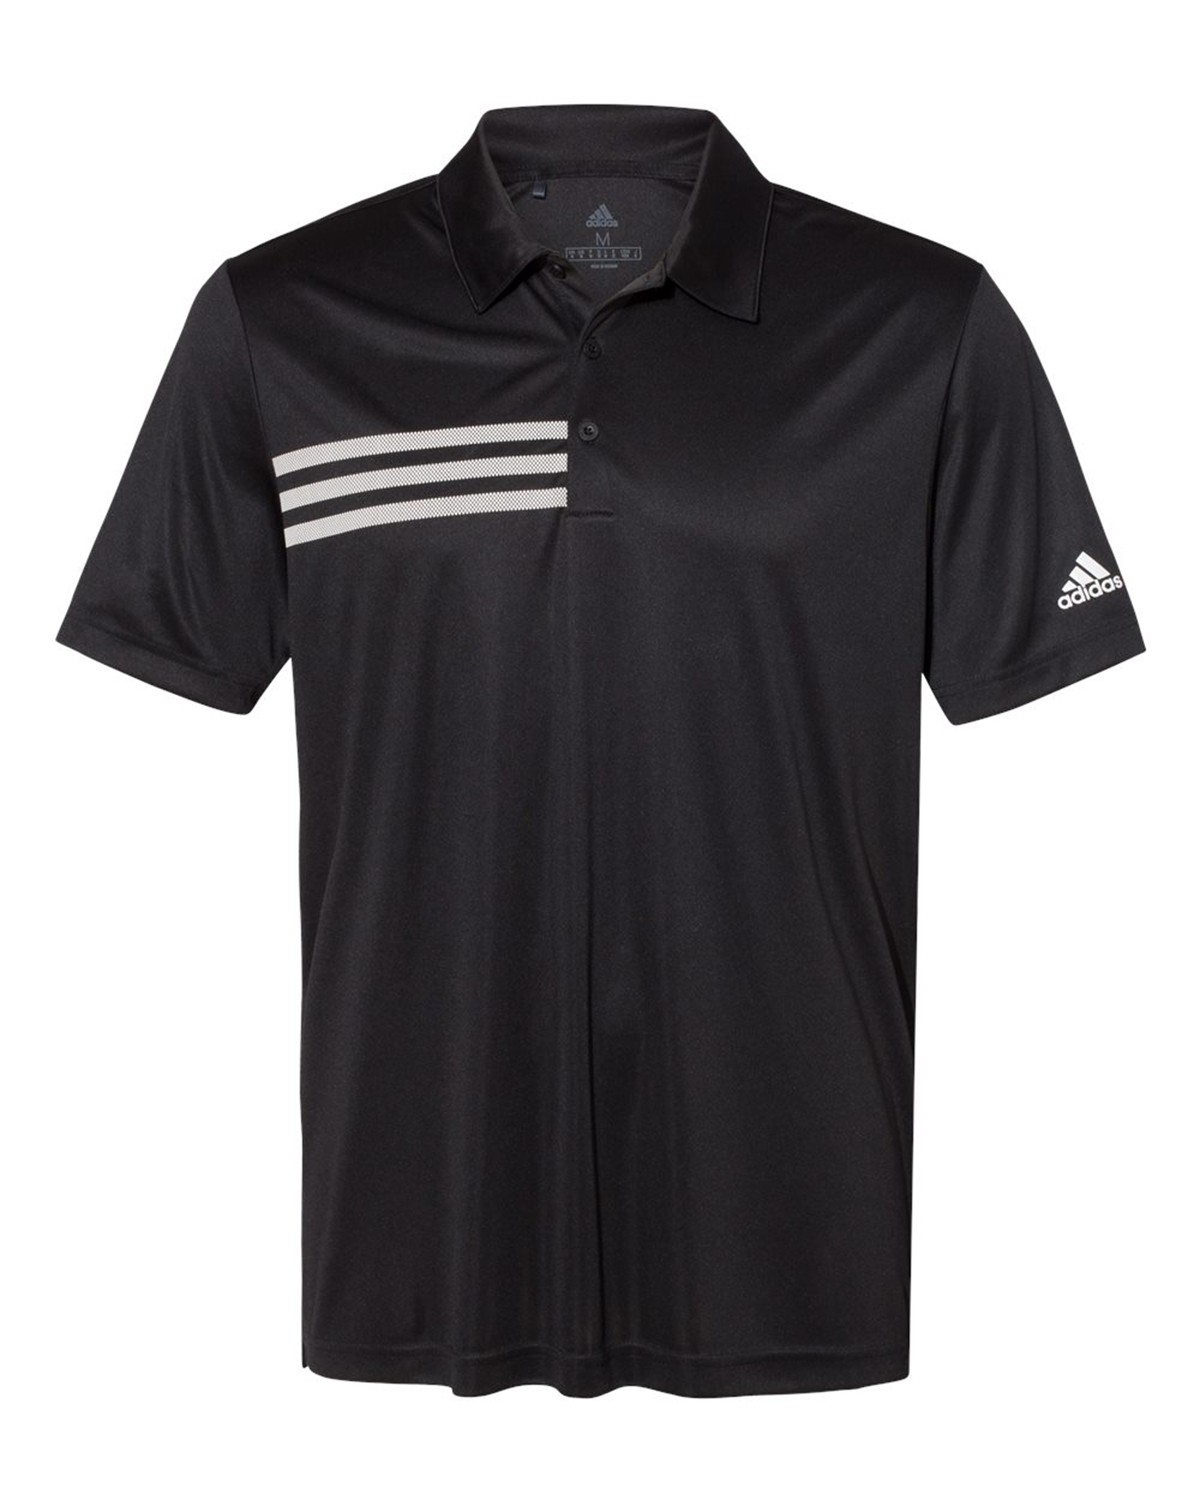 Adidas Golf Polo Sports Shirts Wholesale – ApparelnBags